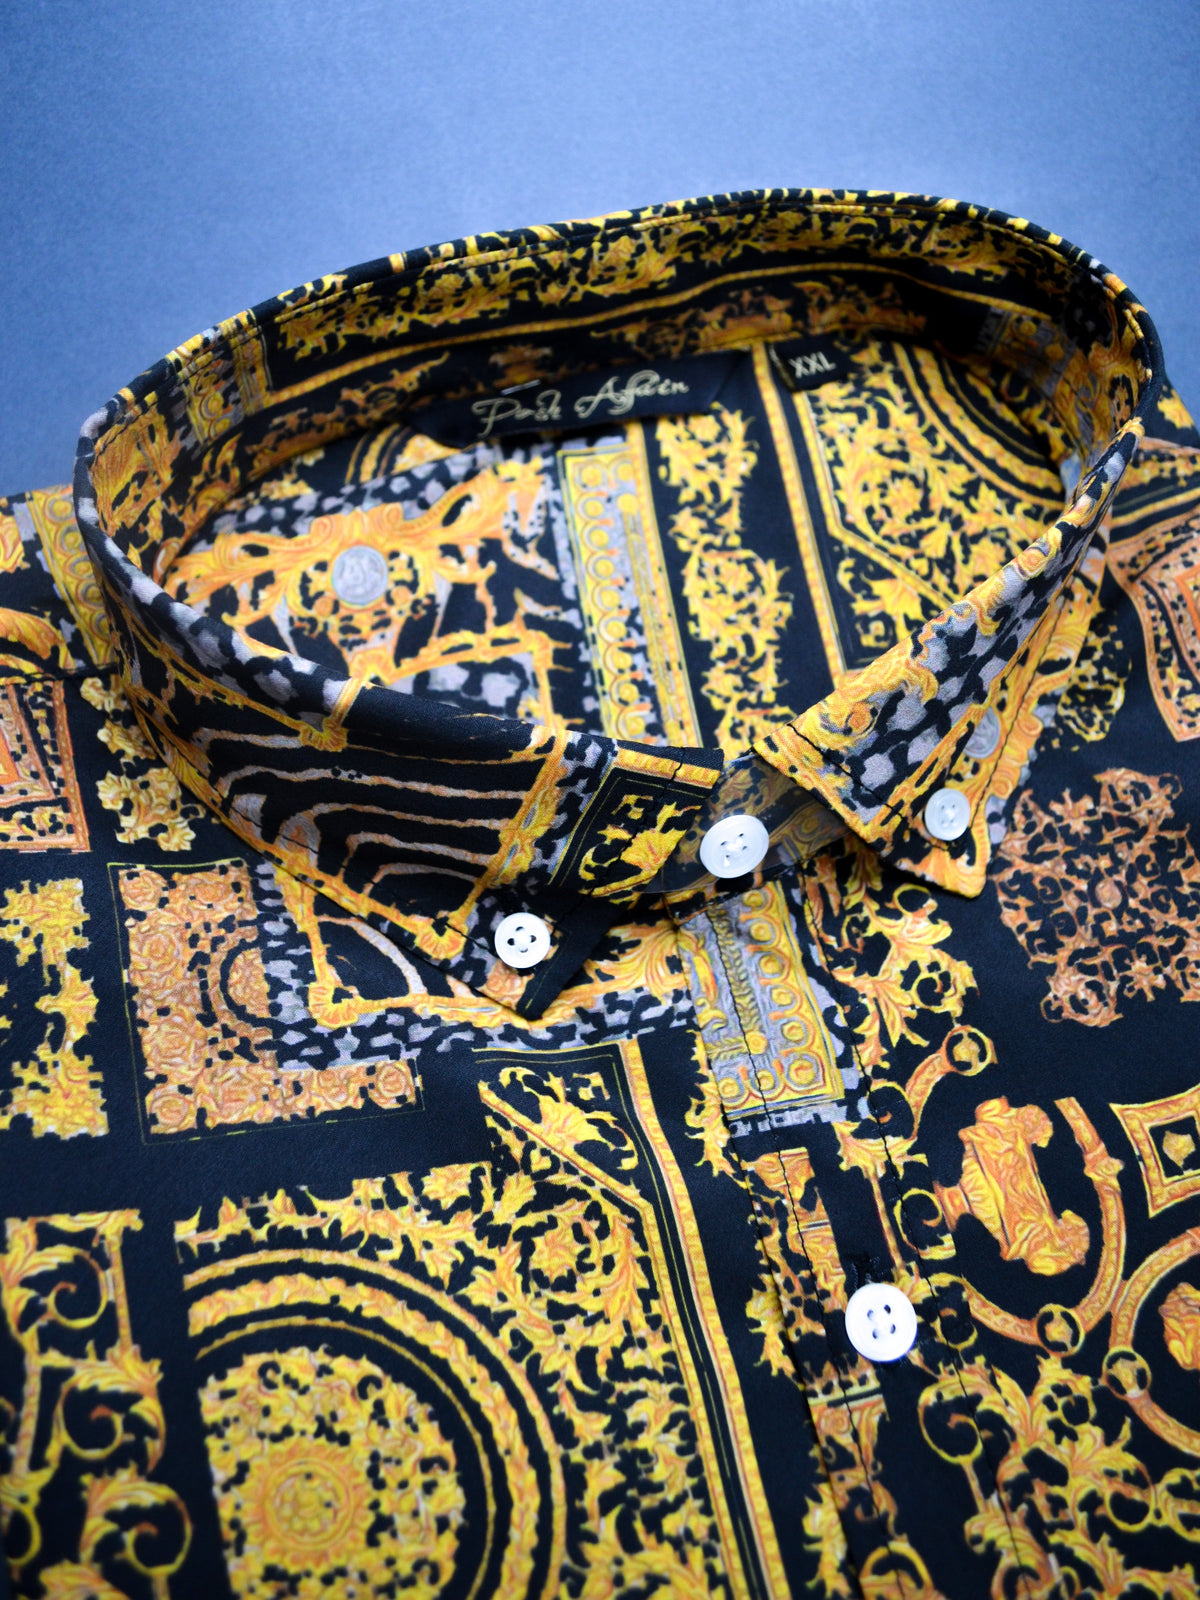 Printed black shirt with gold paisley motif